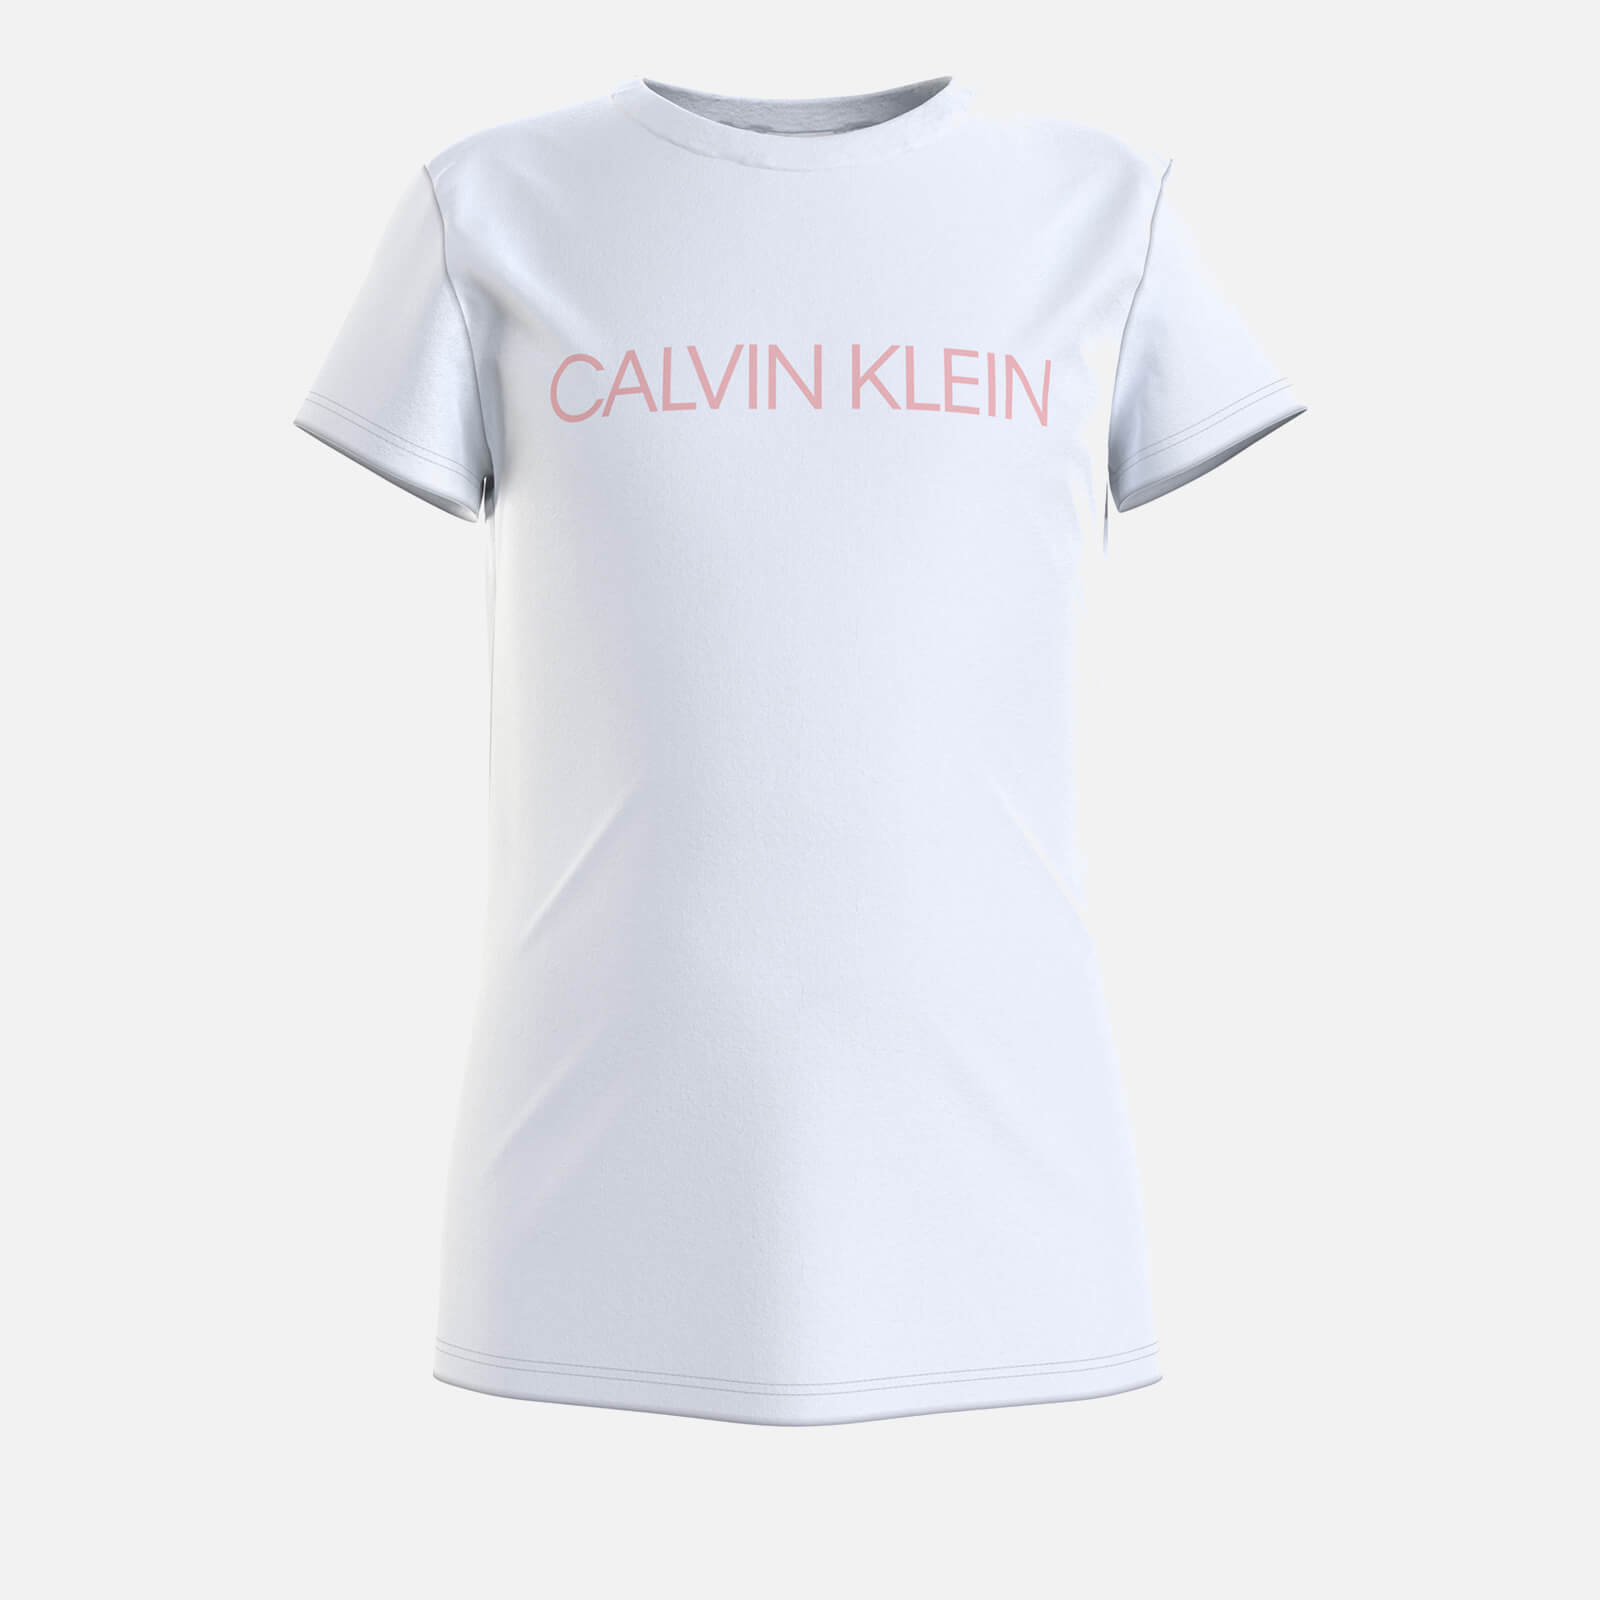 Calvin Klein Jeans Girl's Institutional Slim T-Shirt - White/Sand Rose - 8 Years